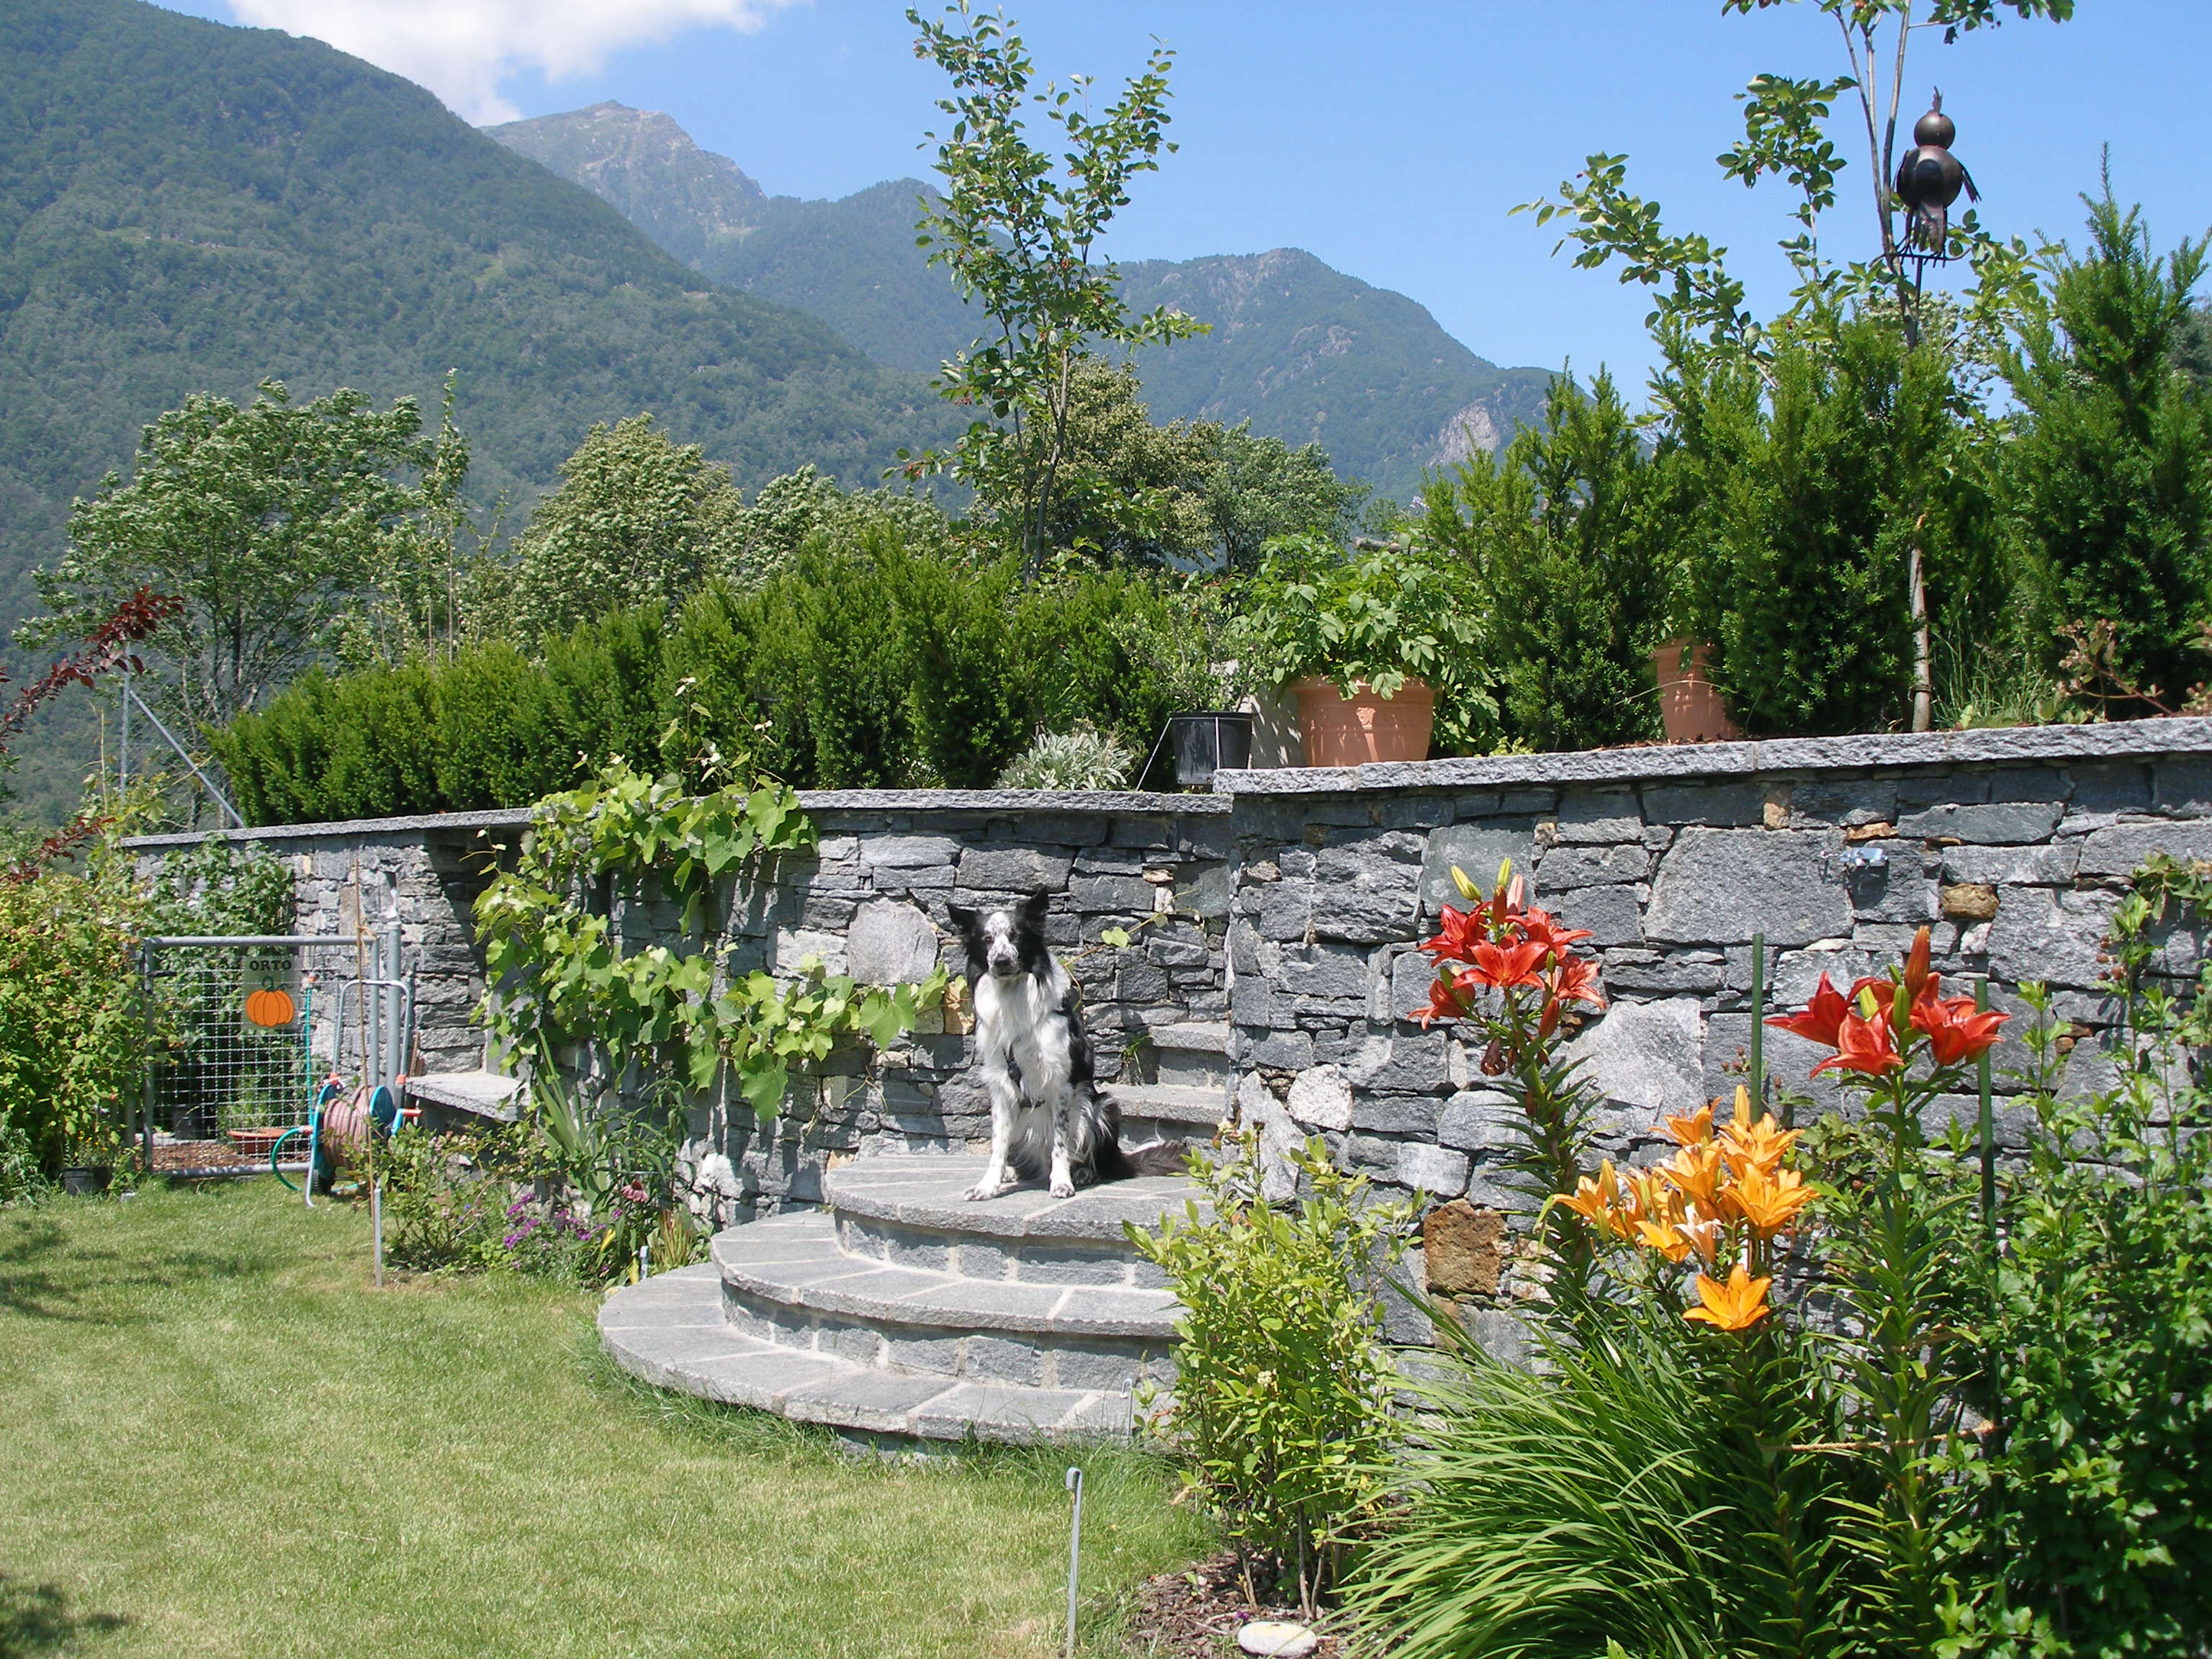 Casa alla Cascata (Maison prés de la cascade) gîtes de vacances Maggia Vallemaggia Tessin Ticino